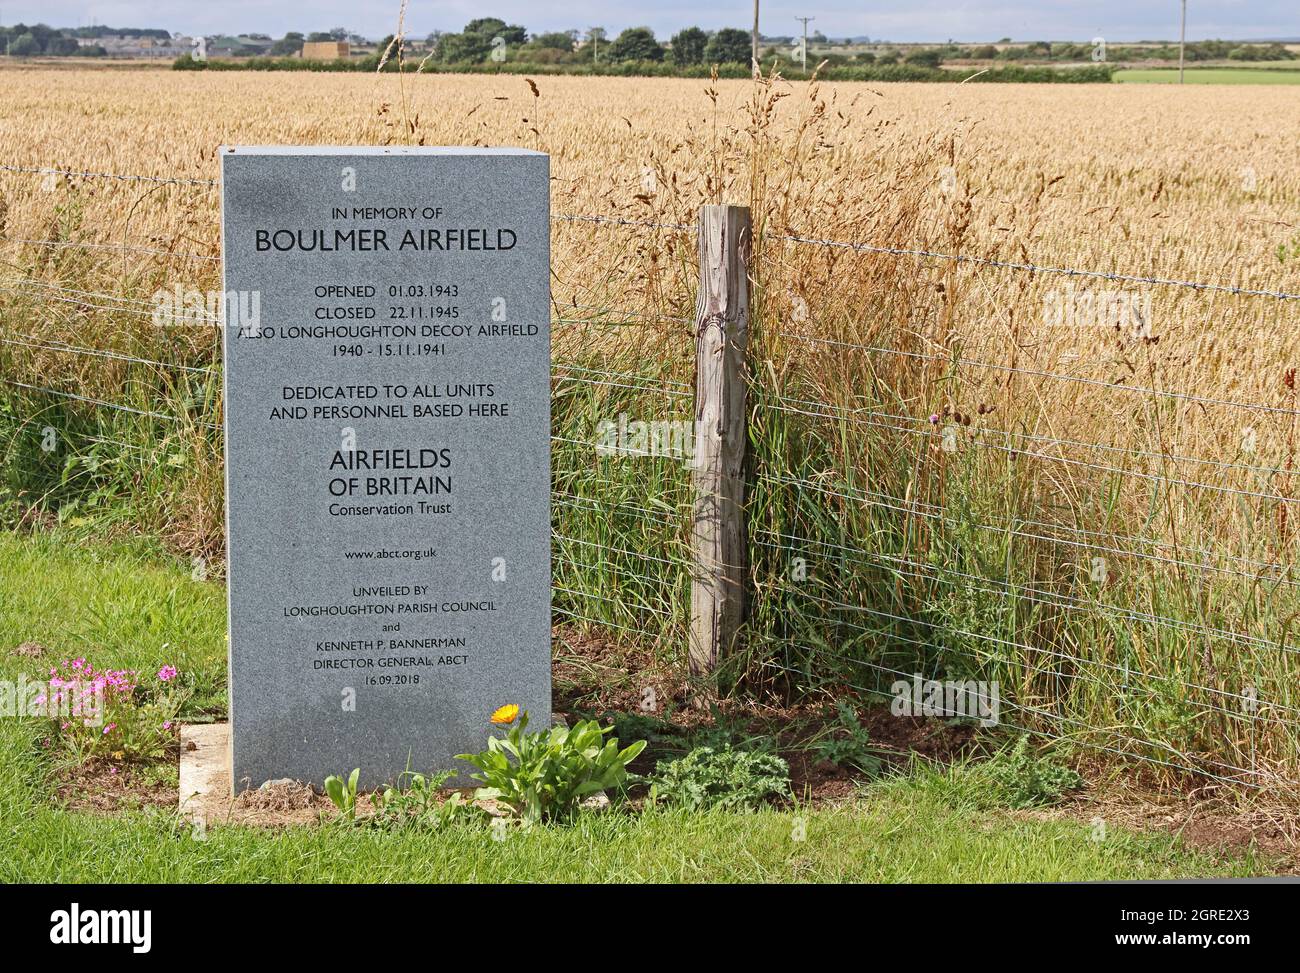 Pietra commemorativa per la seconda guerra mondiale Boulmer Airfield e Longhoughton Decoy Airfield, Boulmer Foto Stock